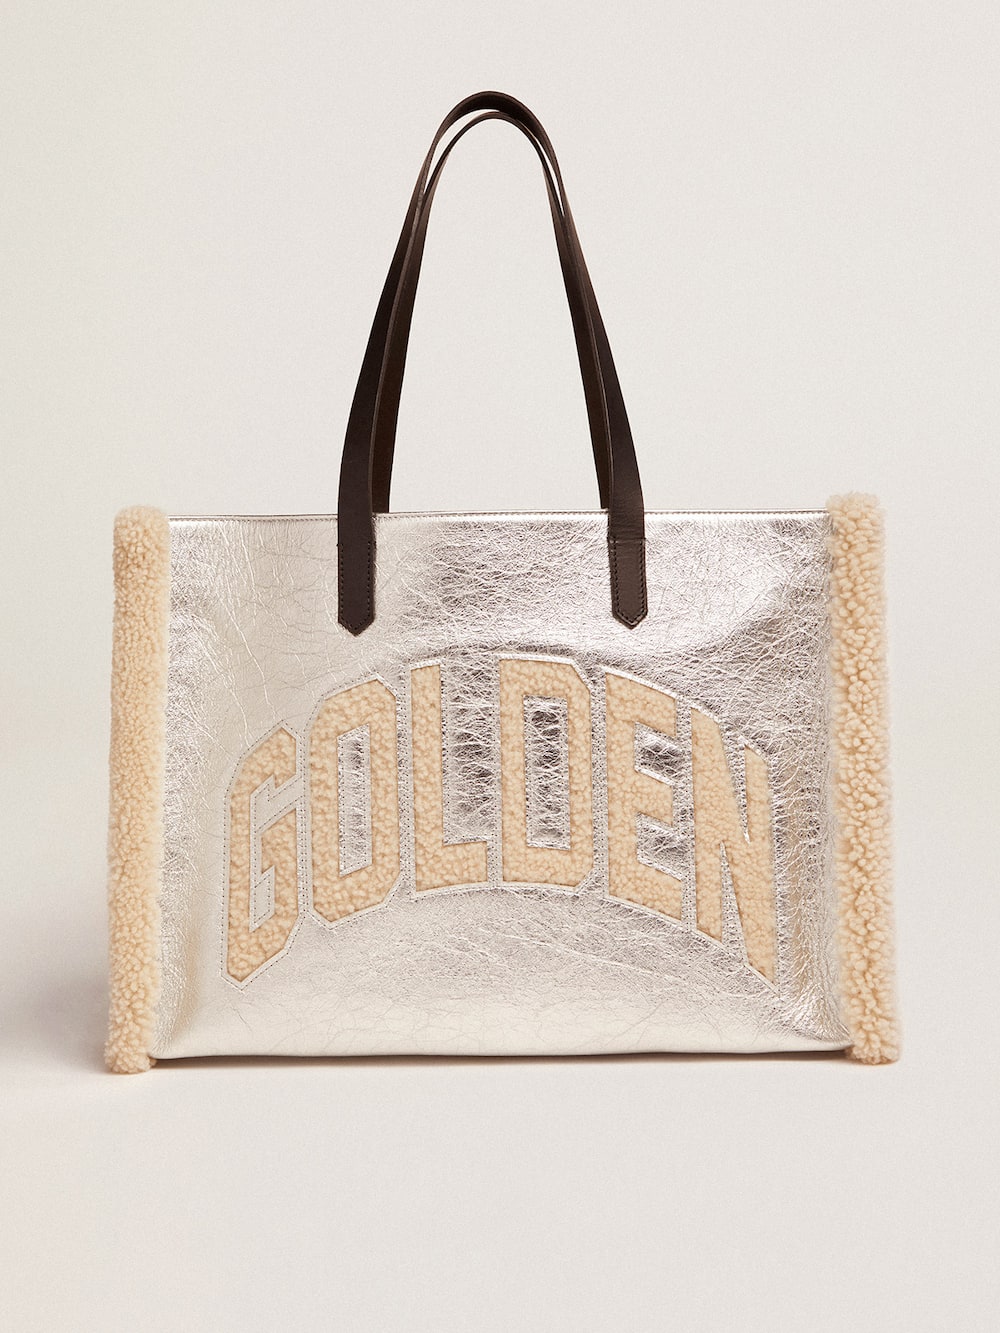 Golden Goose - Bolsa California feminina East-West de couro prateado e inserções de lã in 